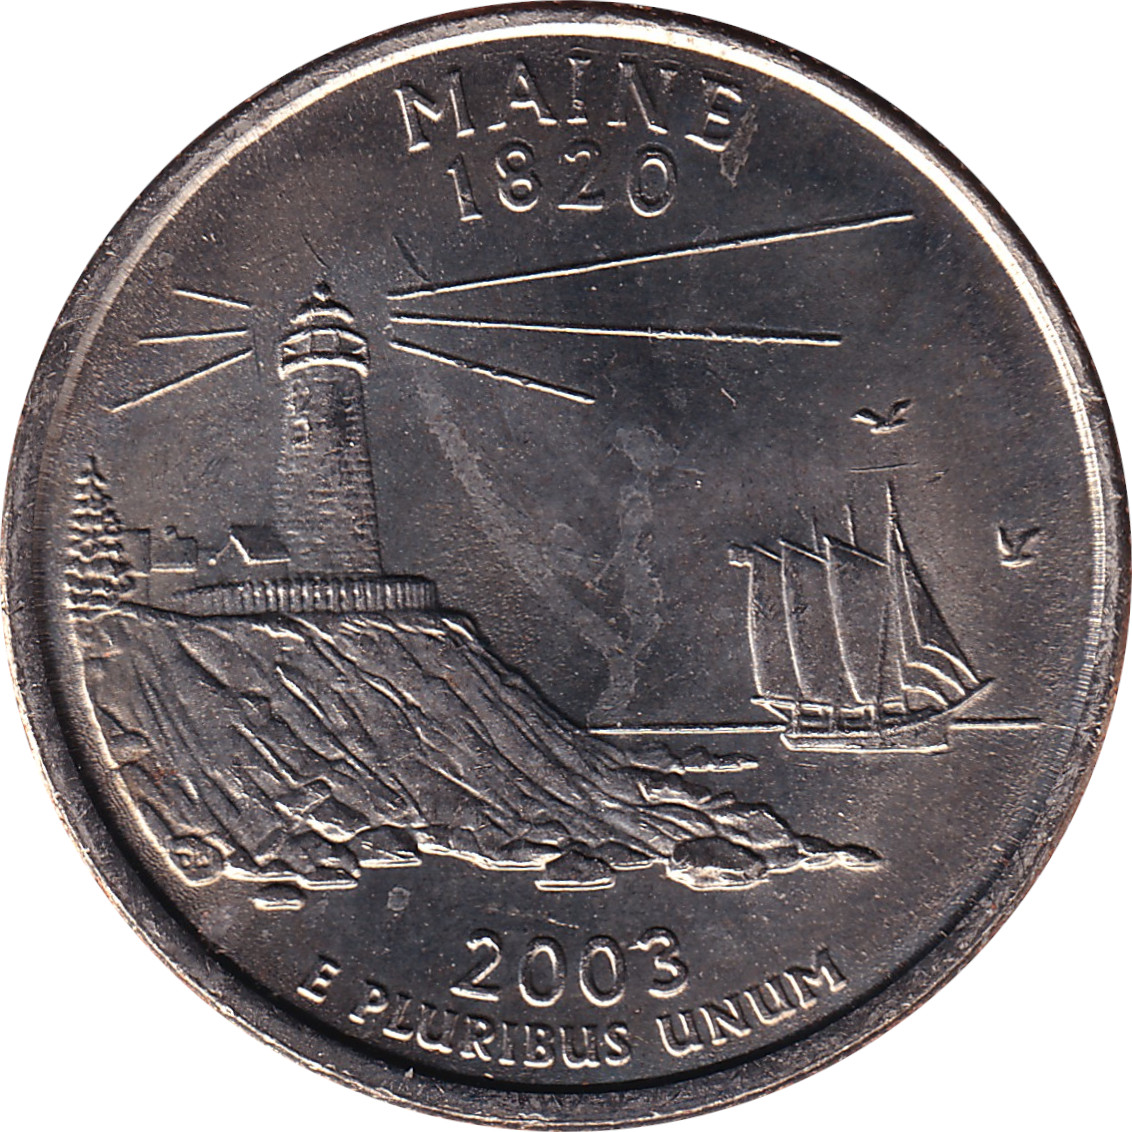 1/4 dollar - Maine